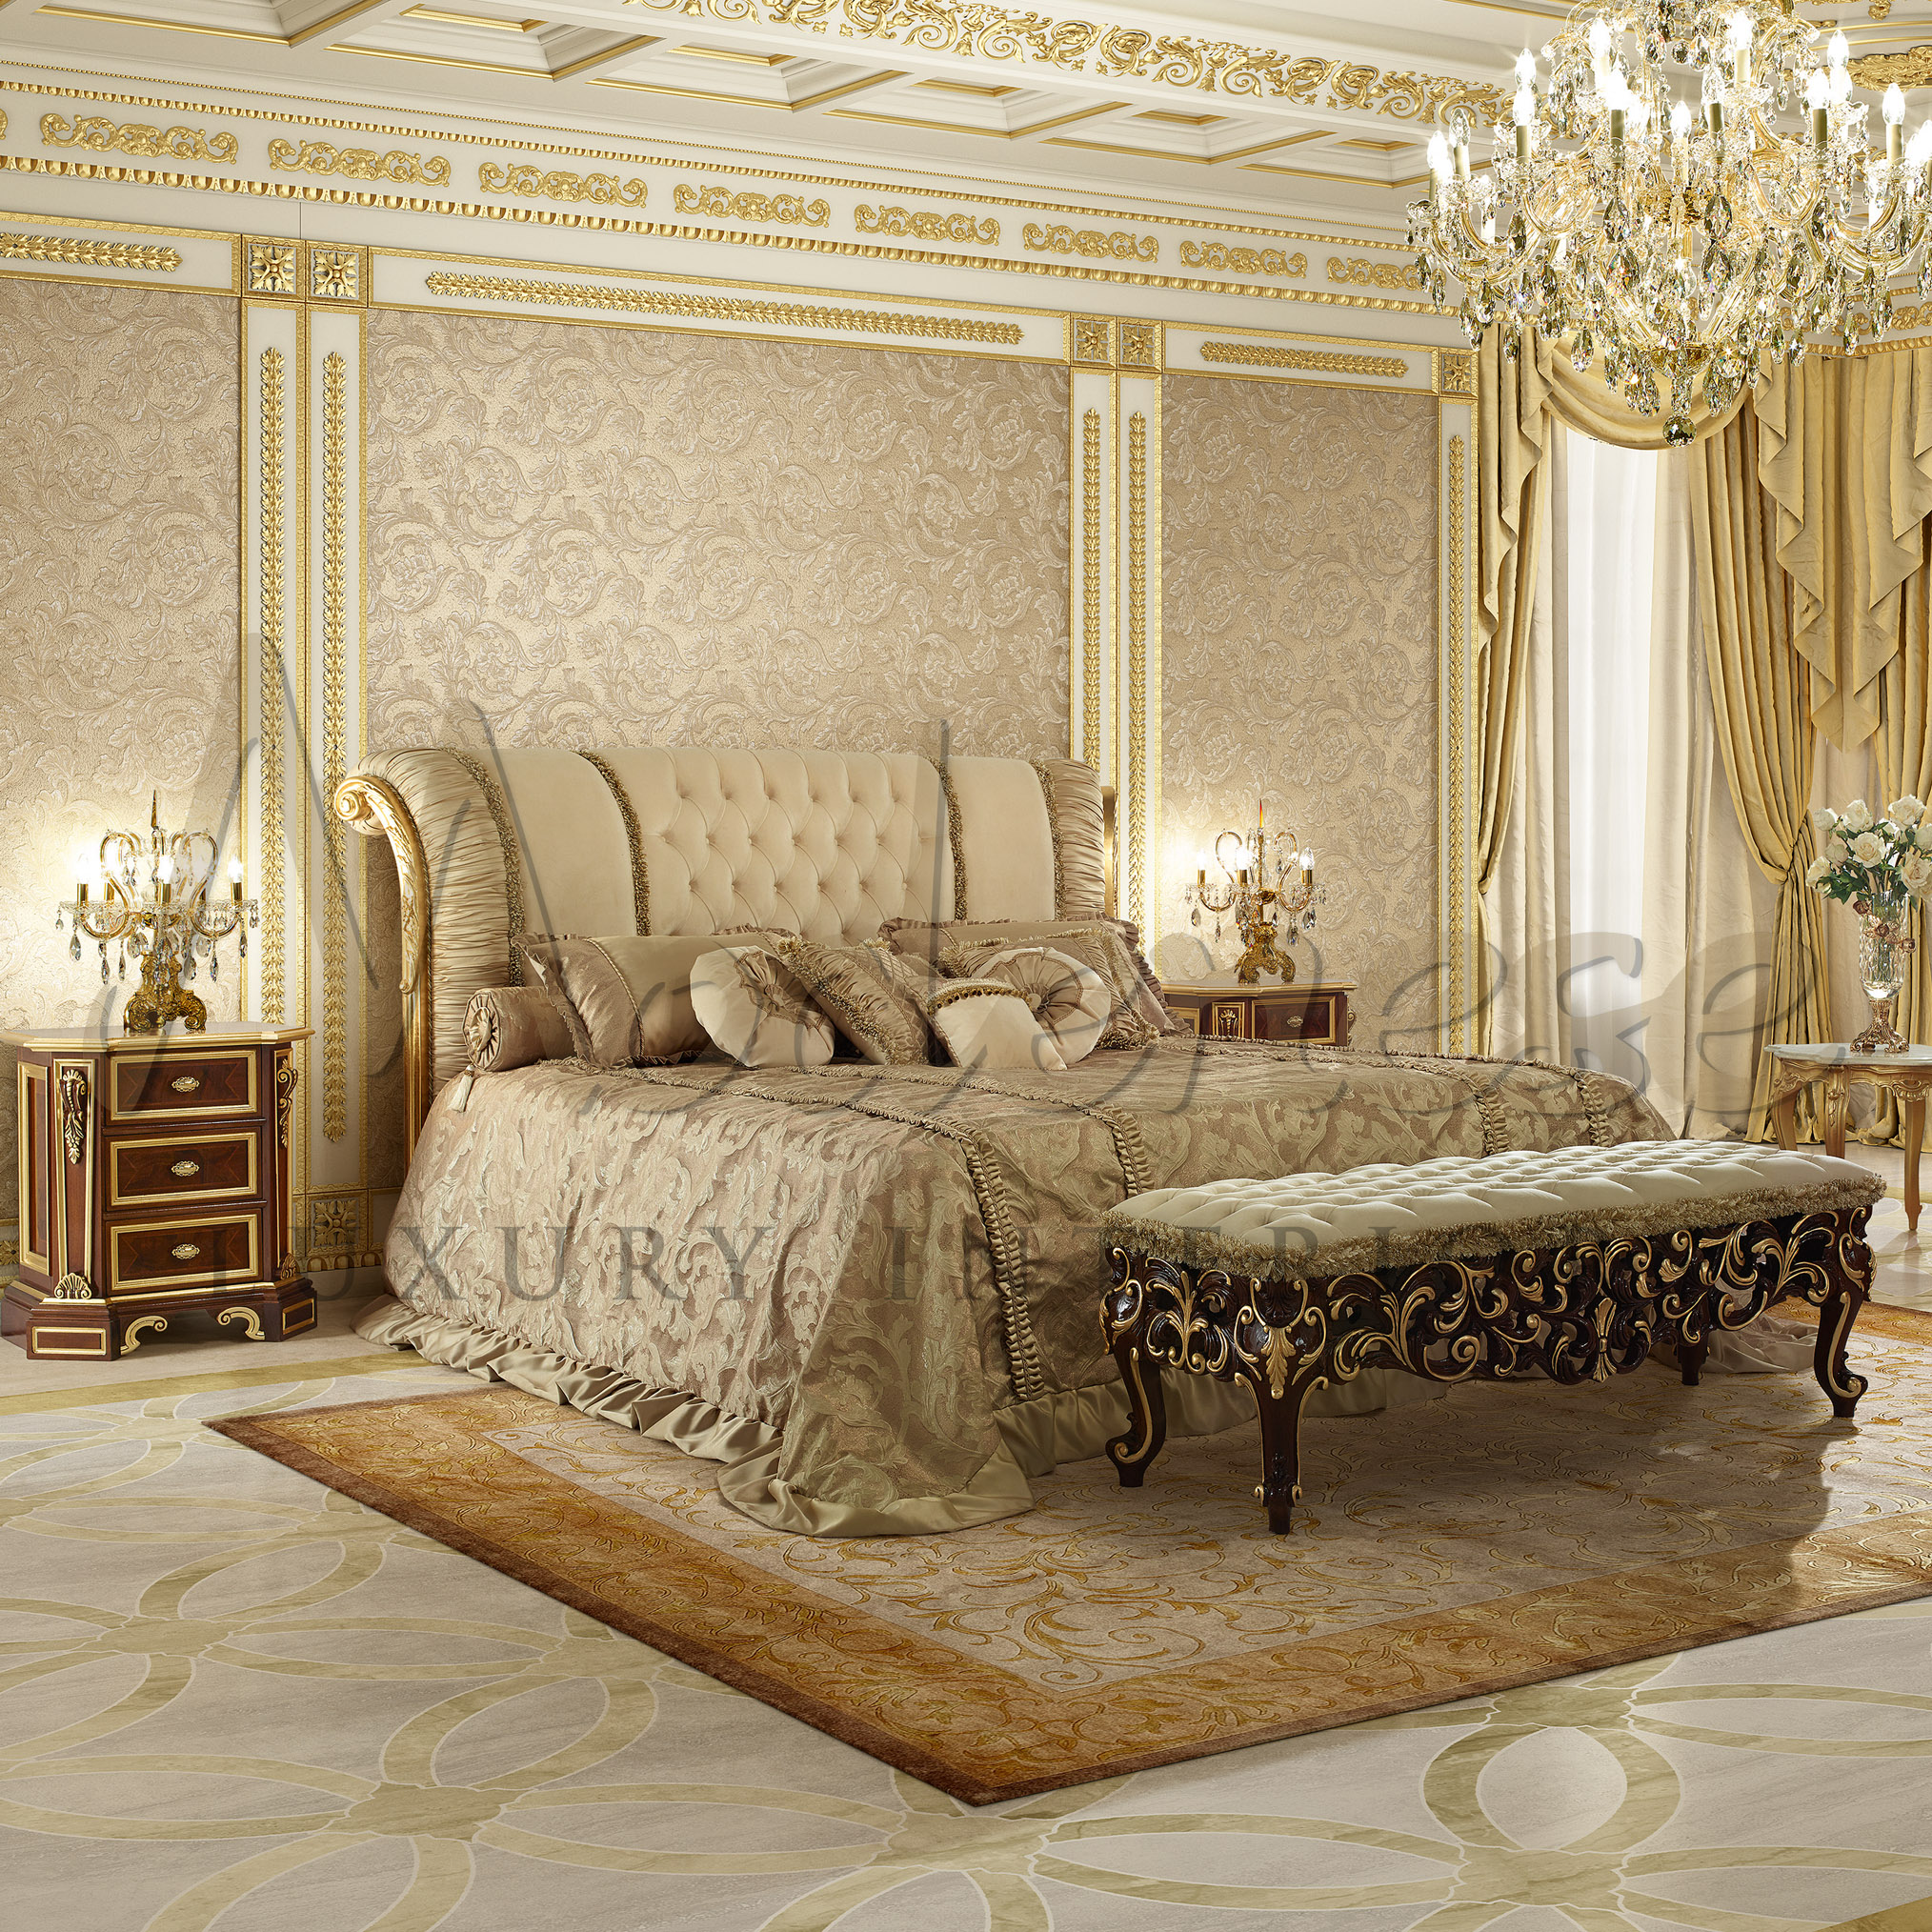 Classical Bedroom For Villa In Riyadh, Saudi Arabia